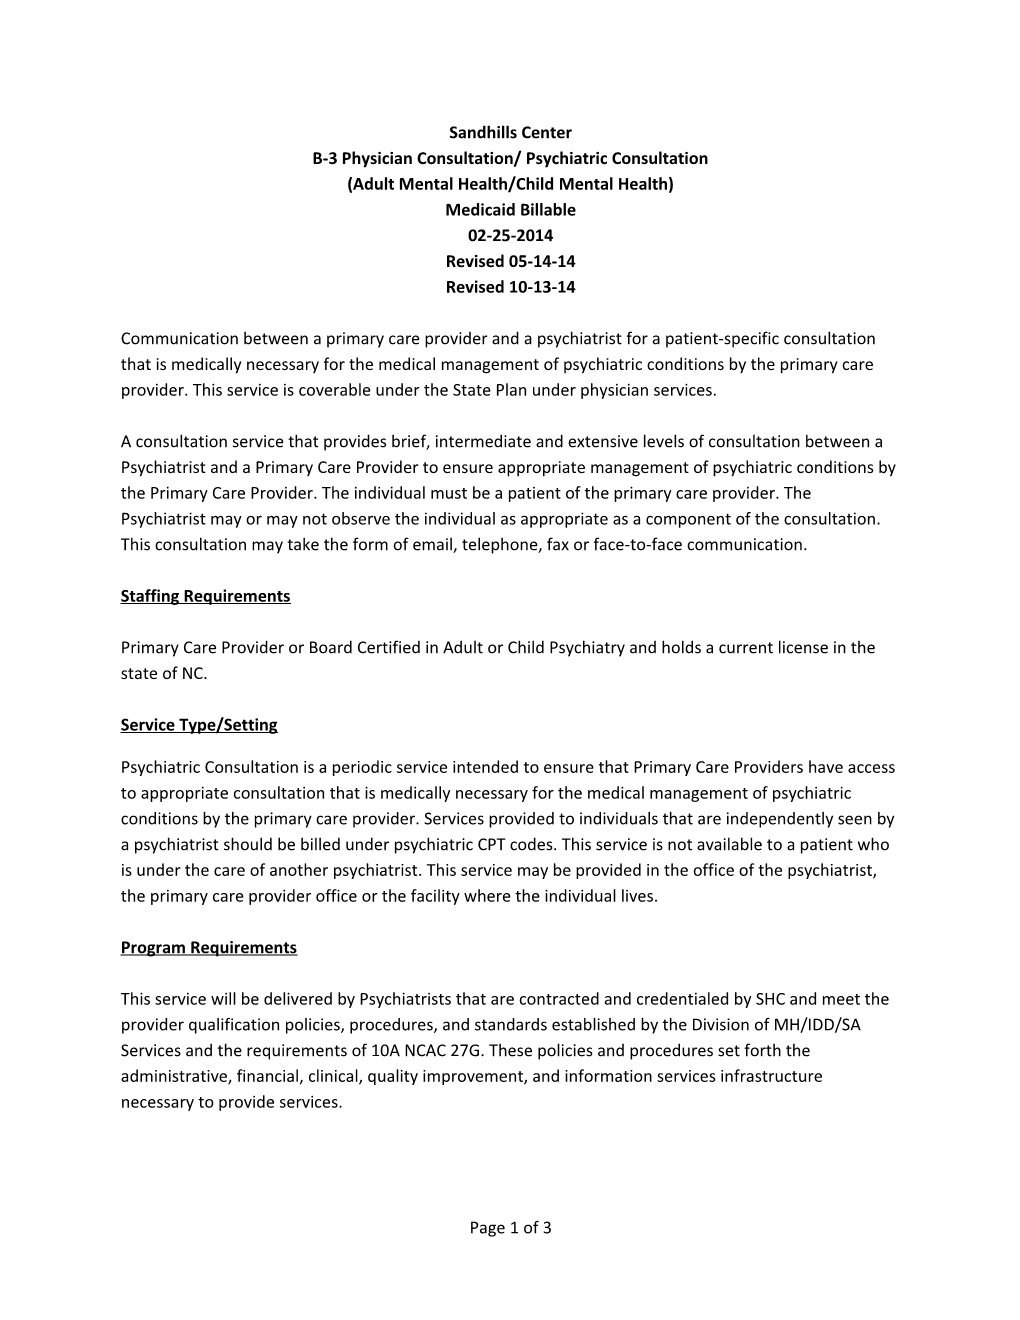 B-3 Physician Consultation/ Psychiatric Consultation